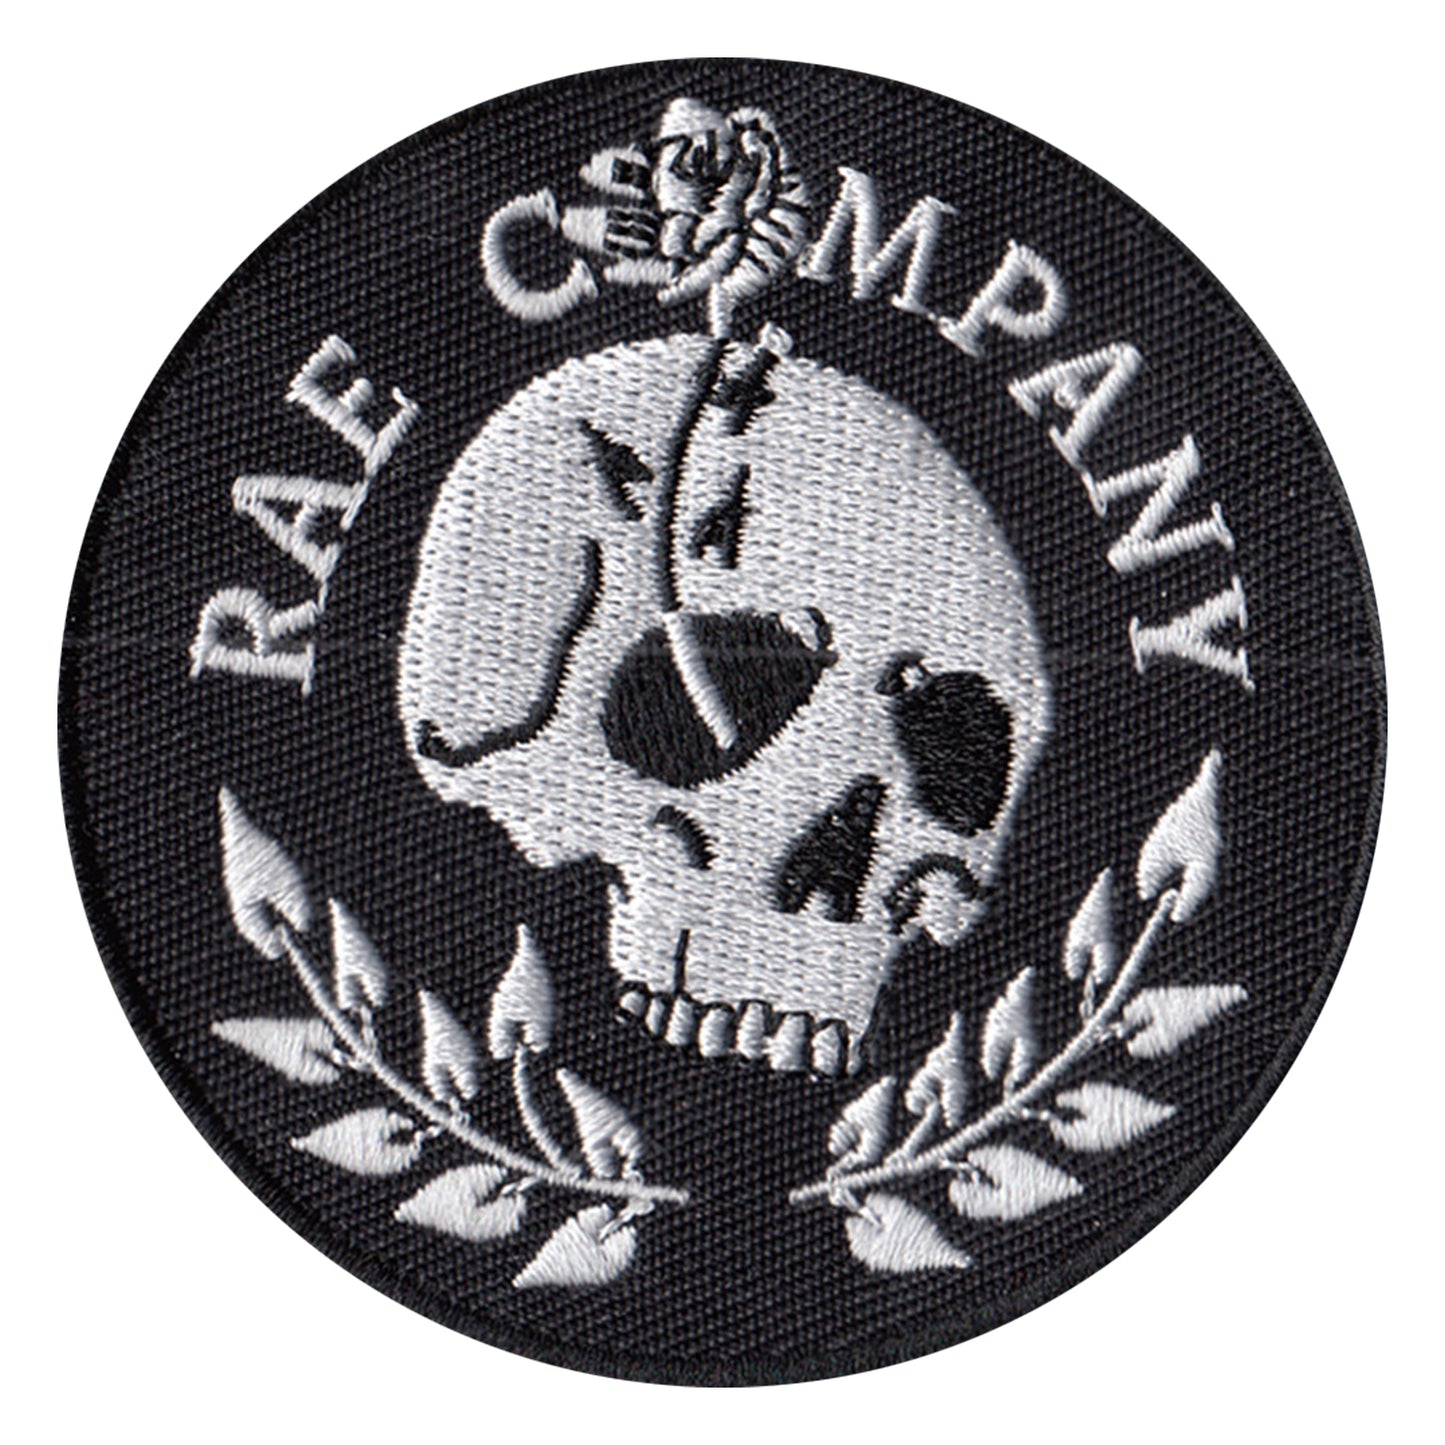 Rae Company Patch